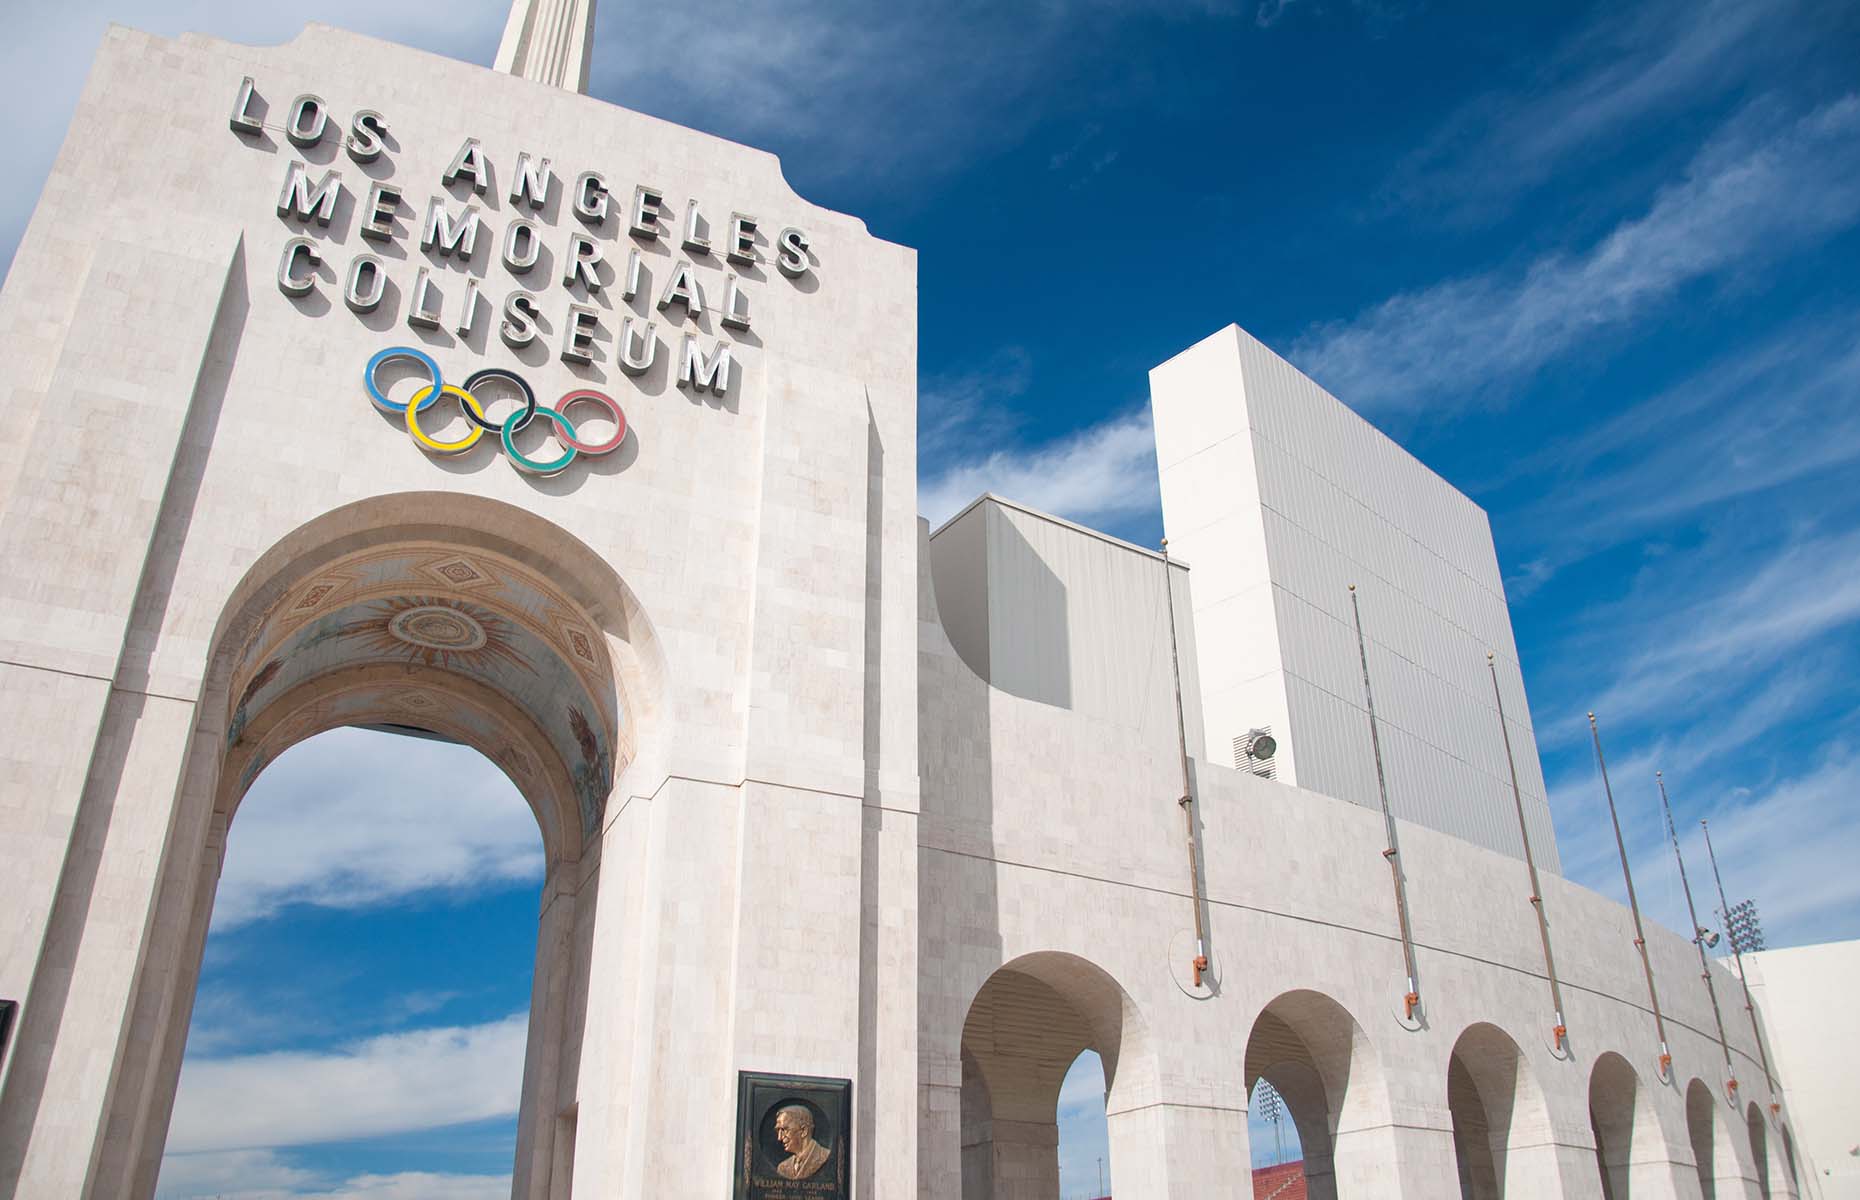 Los Angeles Memorial Coliseum, California. (Image: CHRISTIAN DE ARAUJO/Shutterstock)